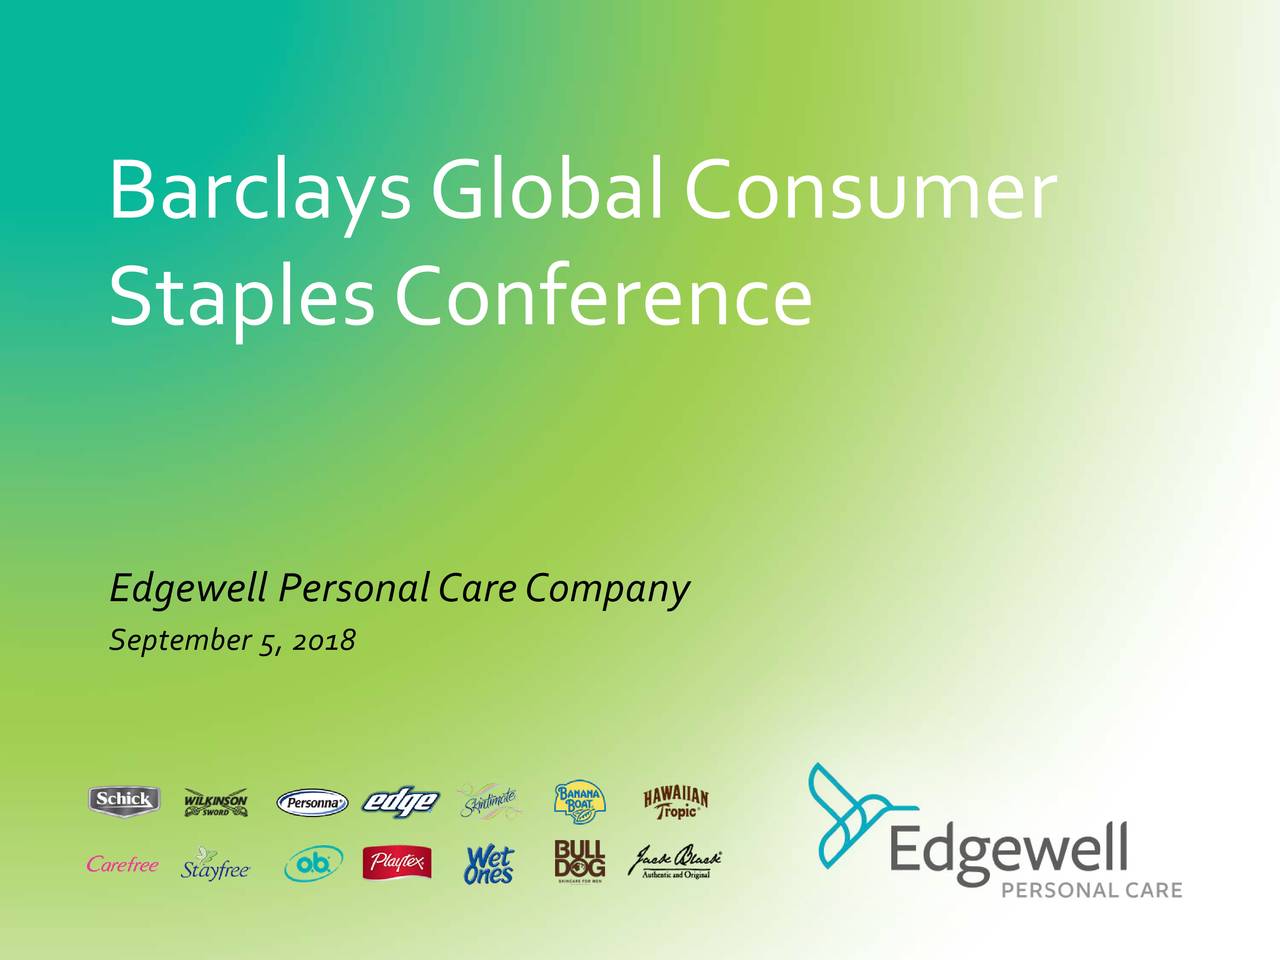 Barclays GlobalConsumer